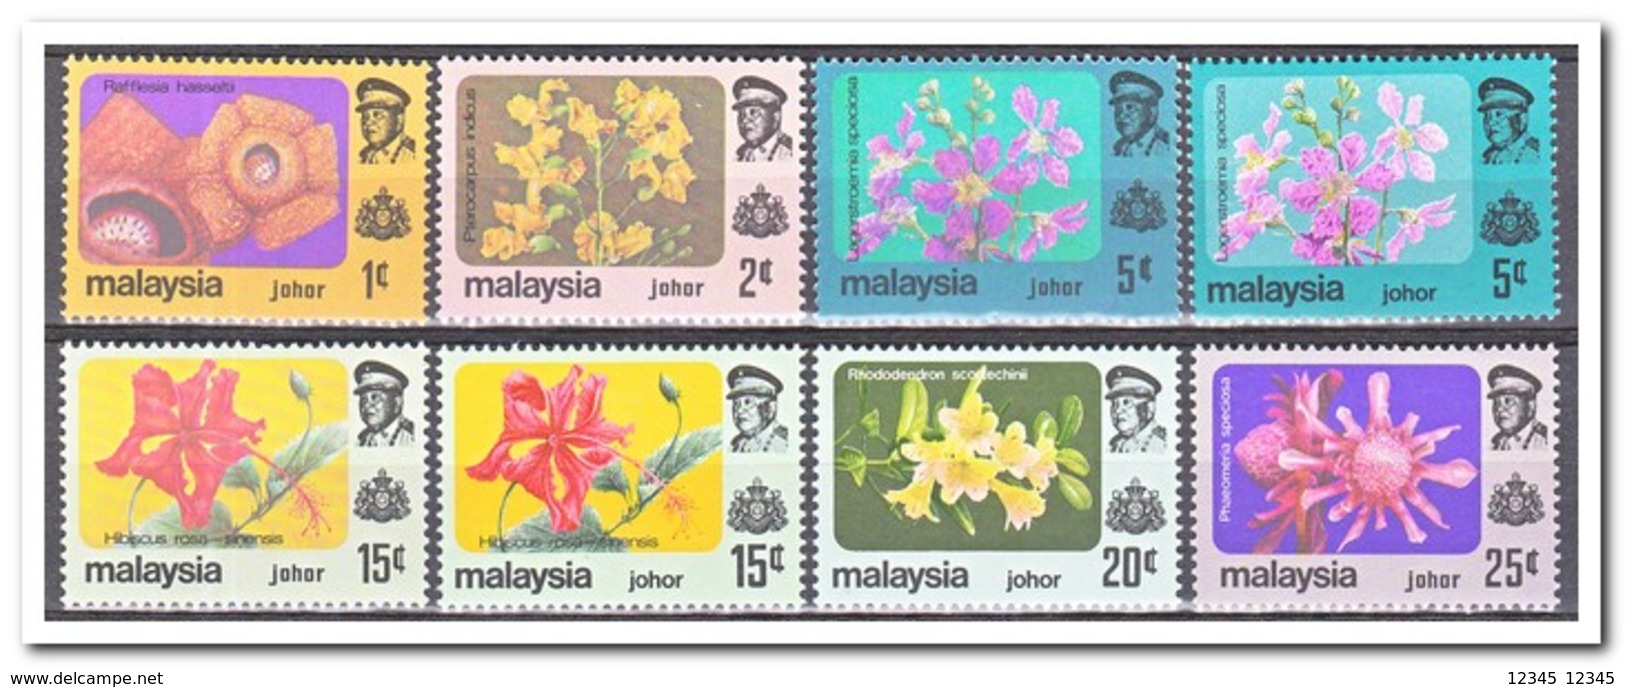 Maleisië Johor 1979, Postfris MNH, Flowers - Maleisië (1964-...)